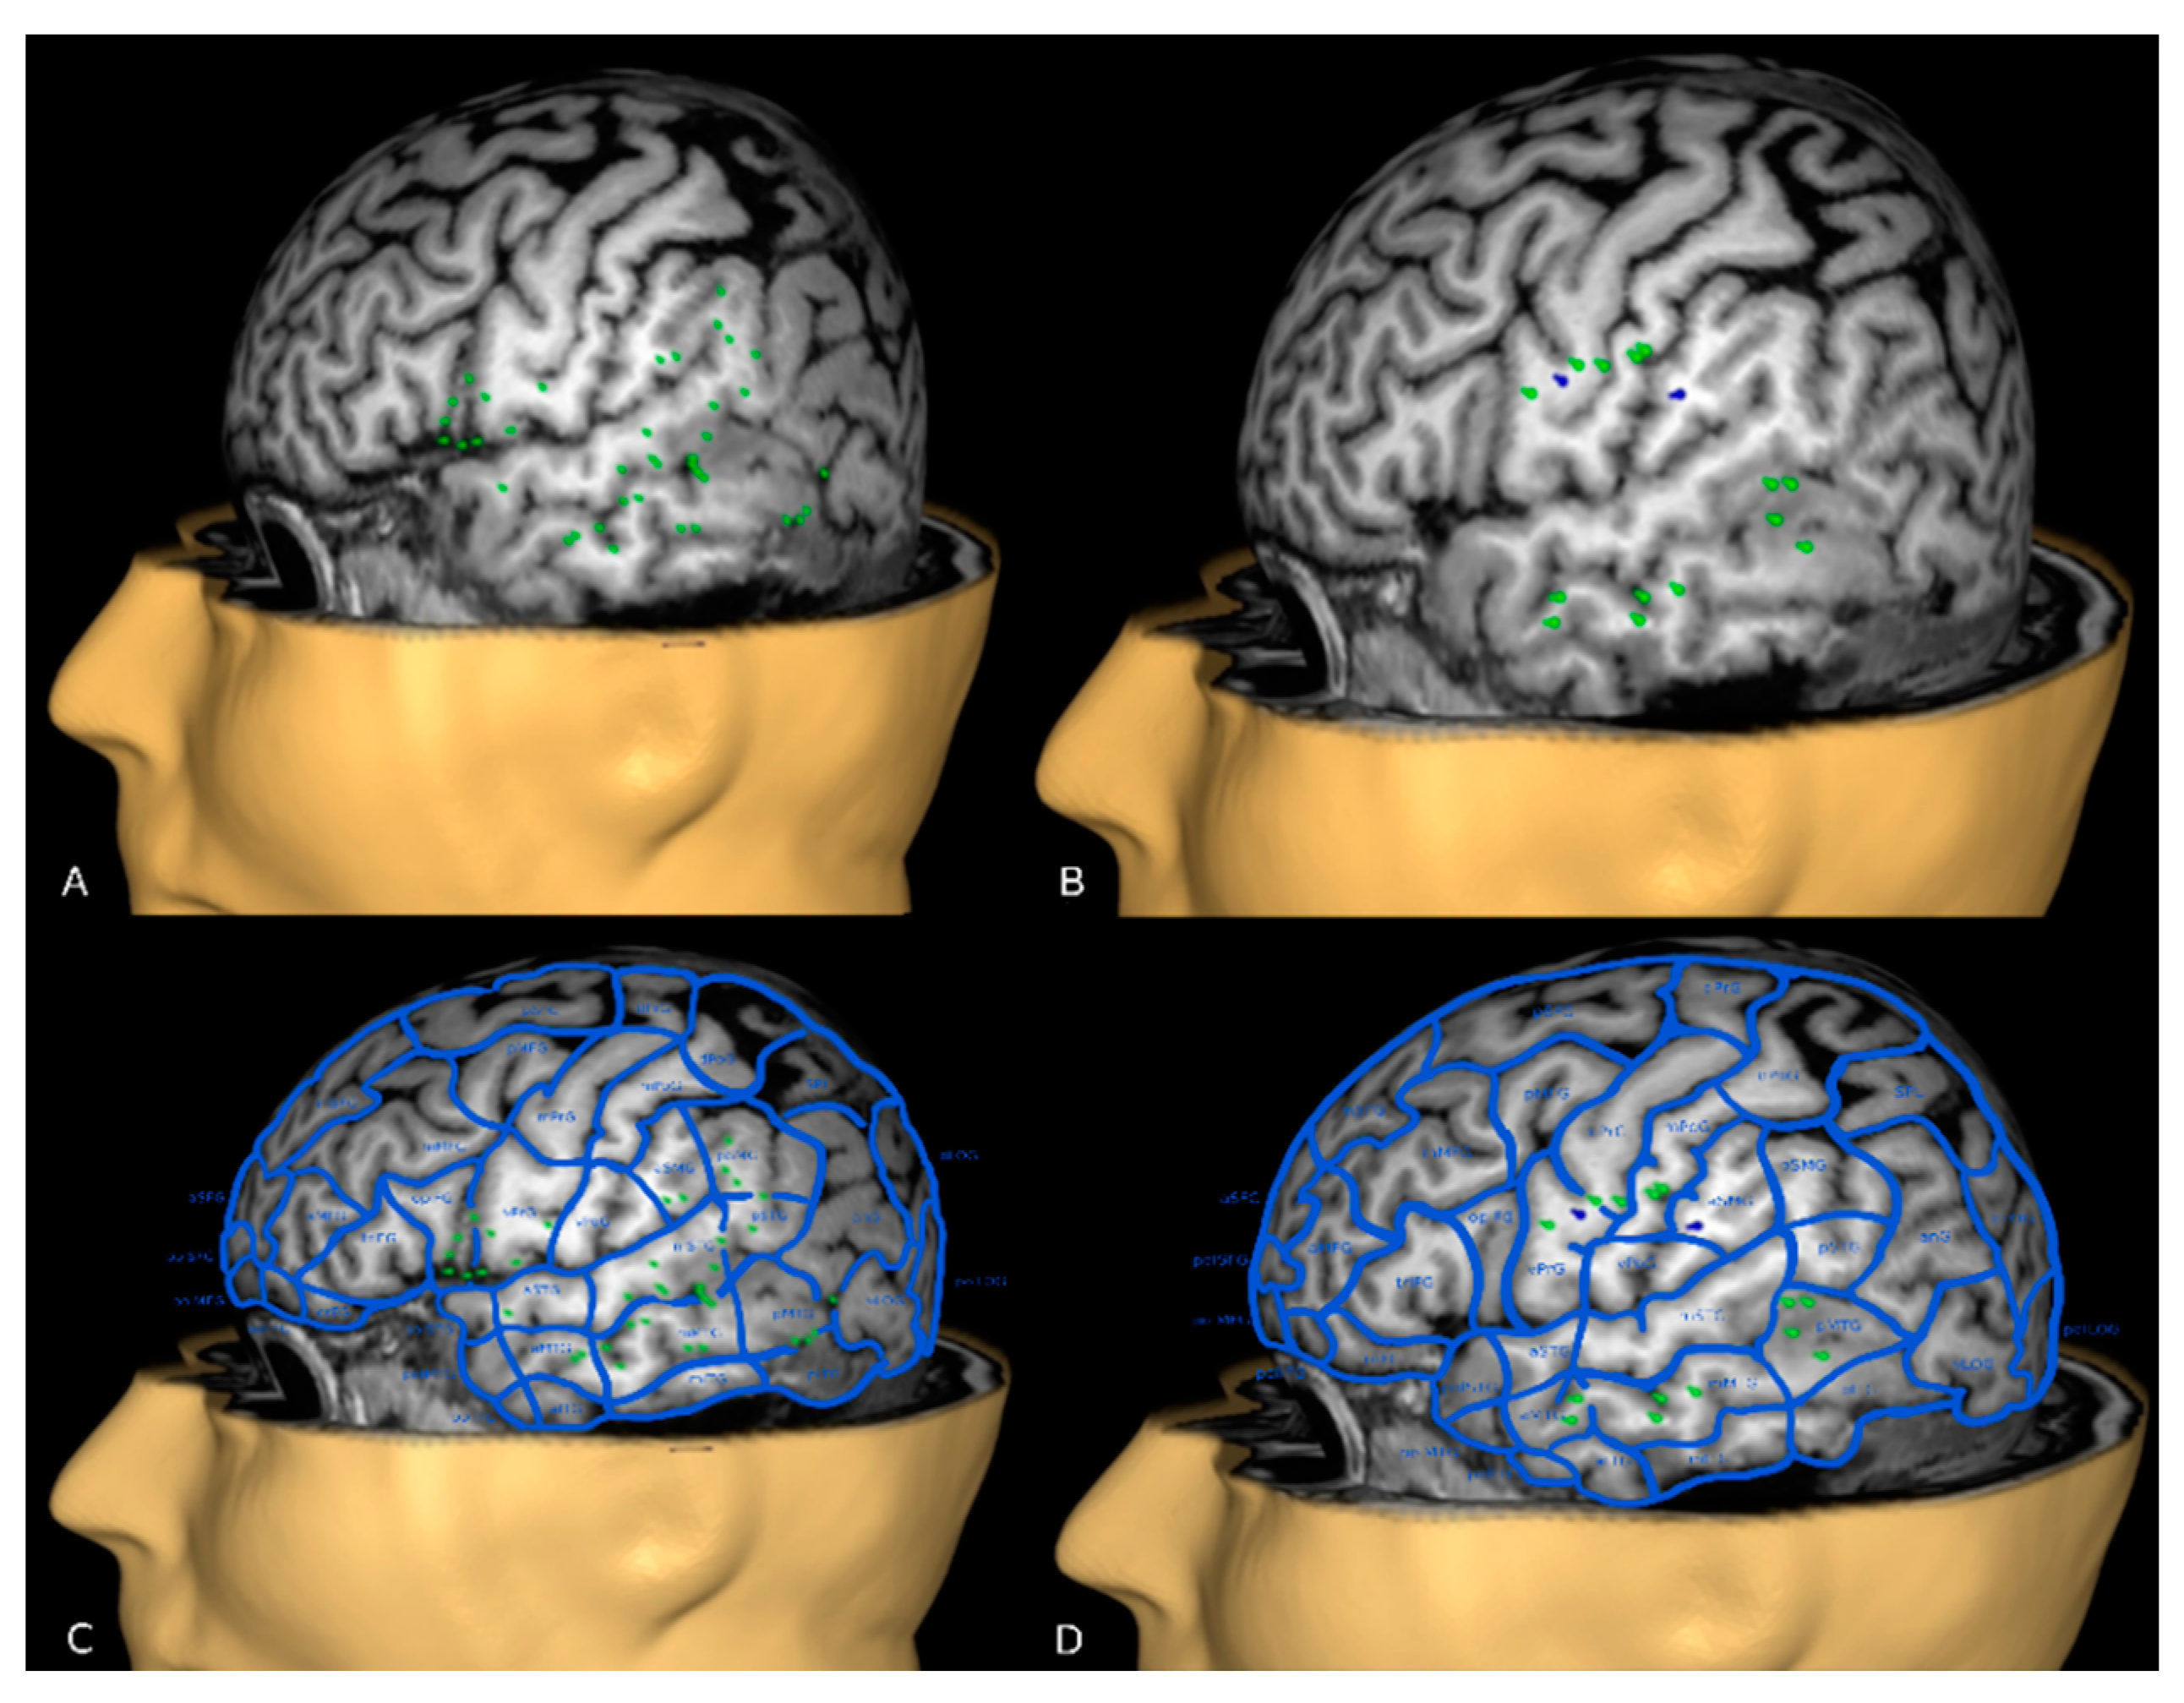 brain mapping procedure